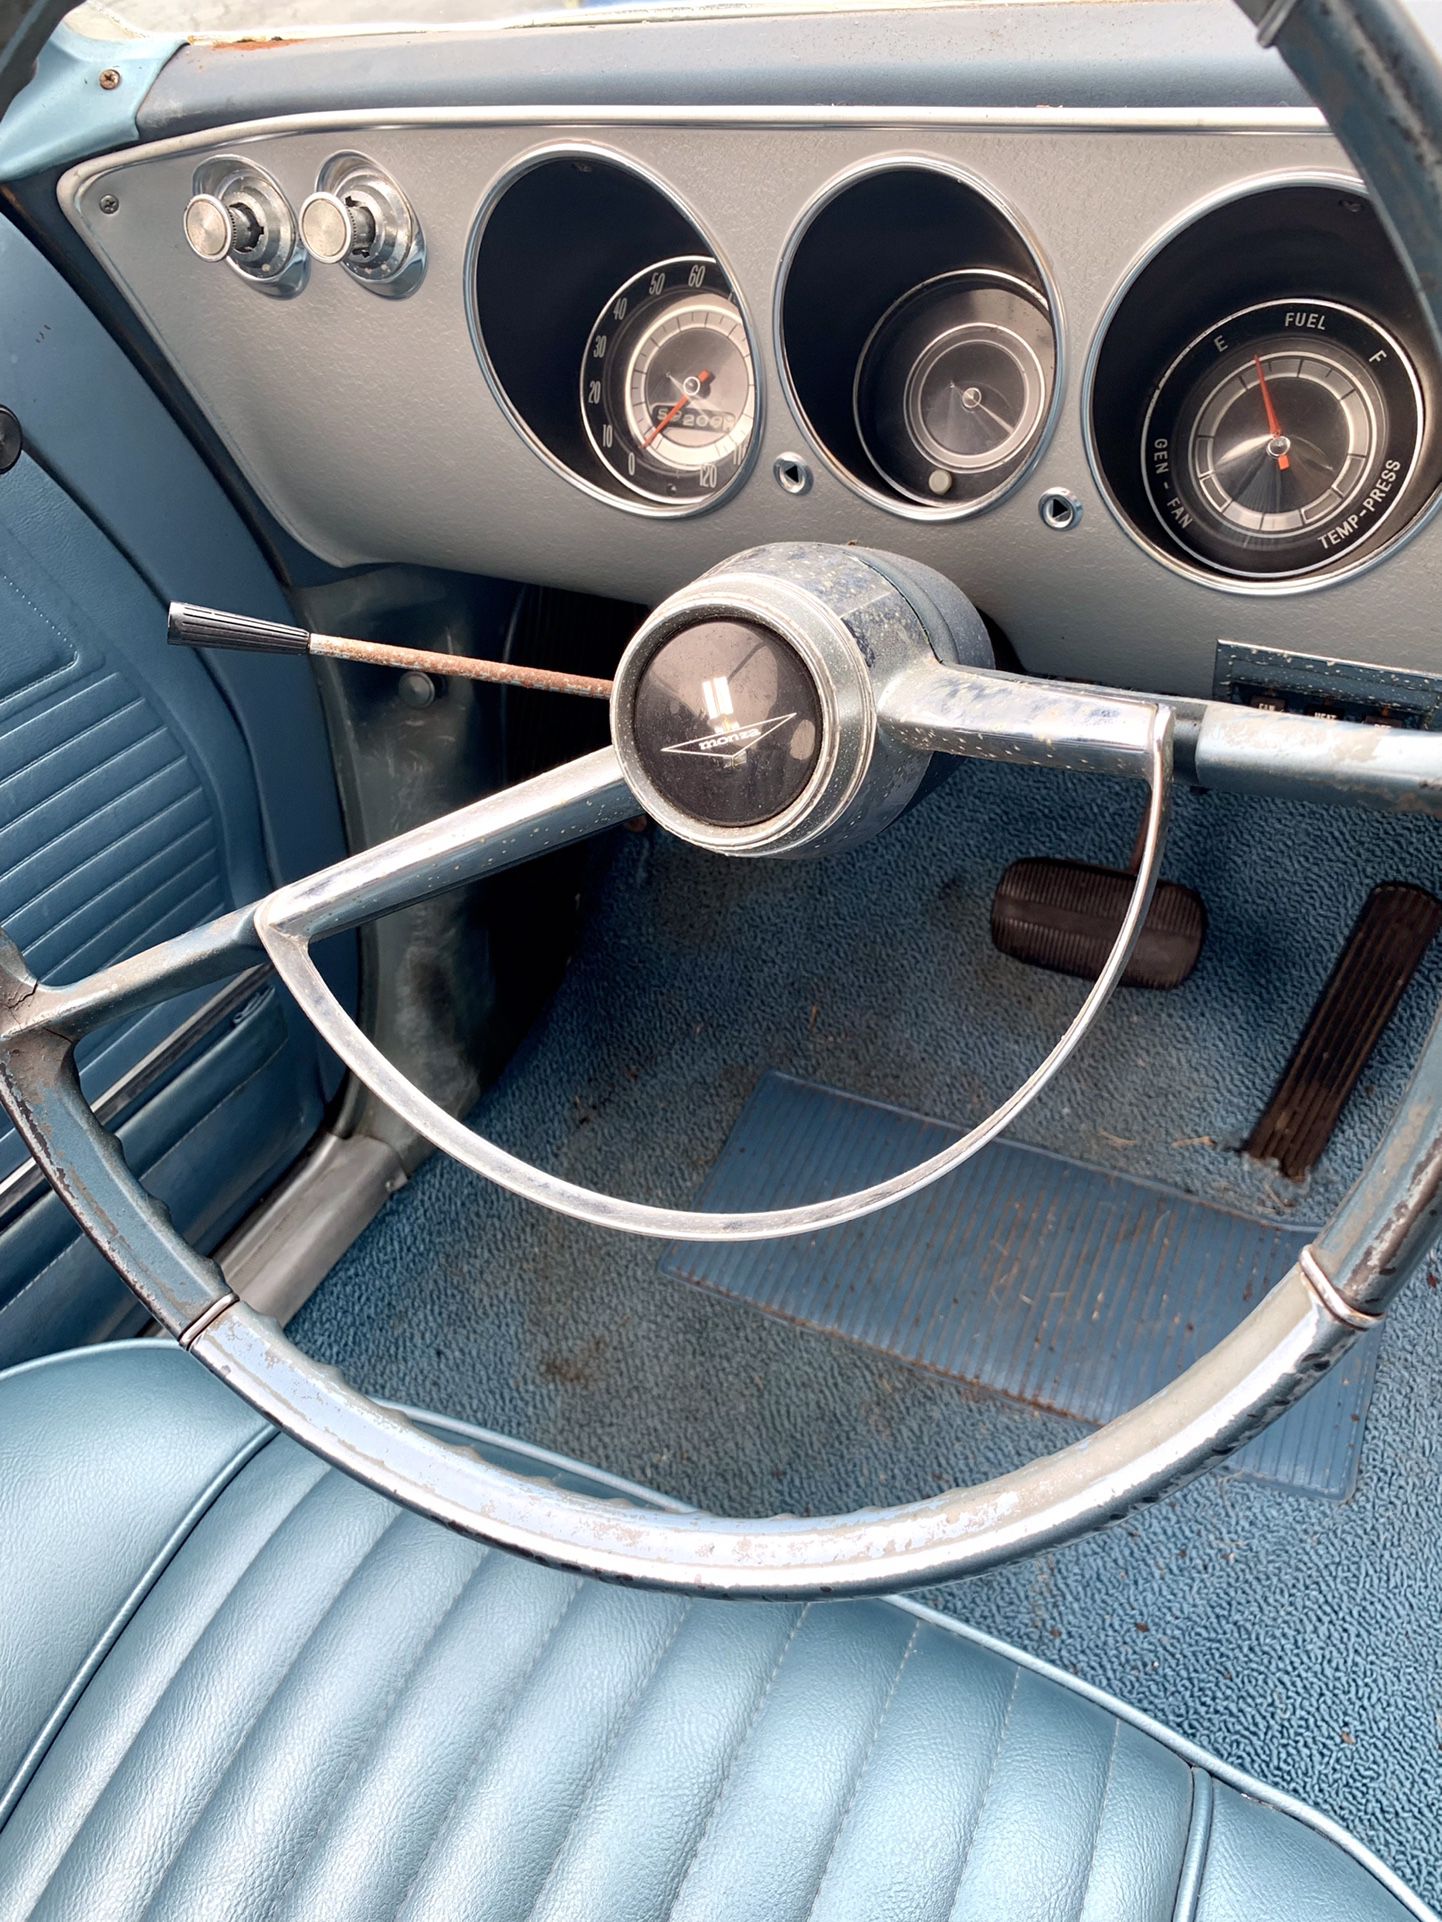 1965 Chevrolet Corvair Sedan. Light Blue. Start, Run And Drive. 